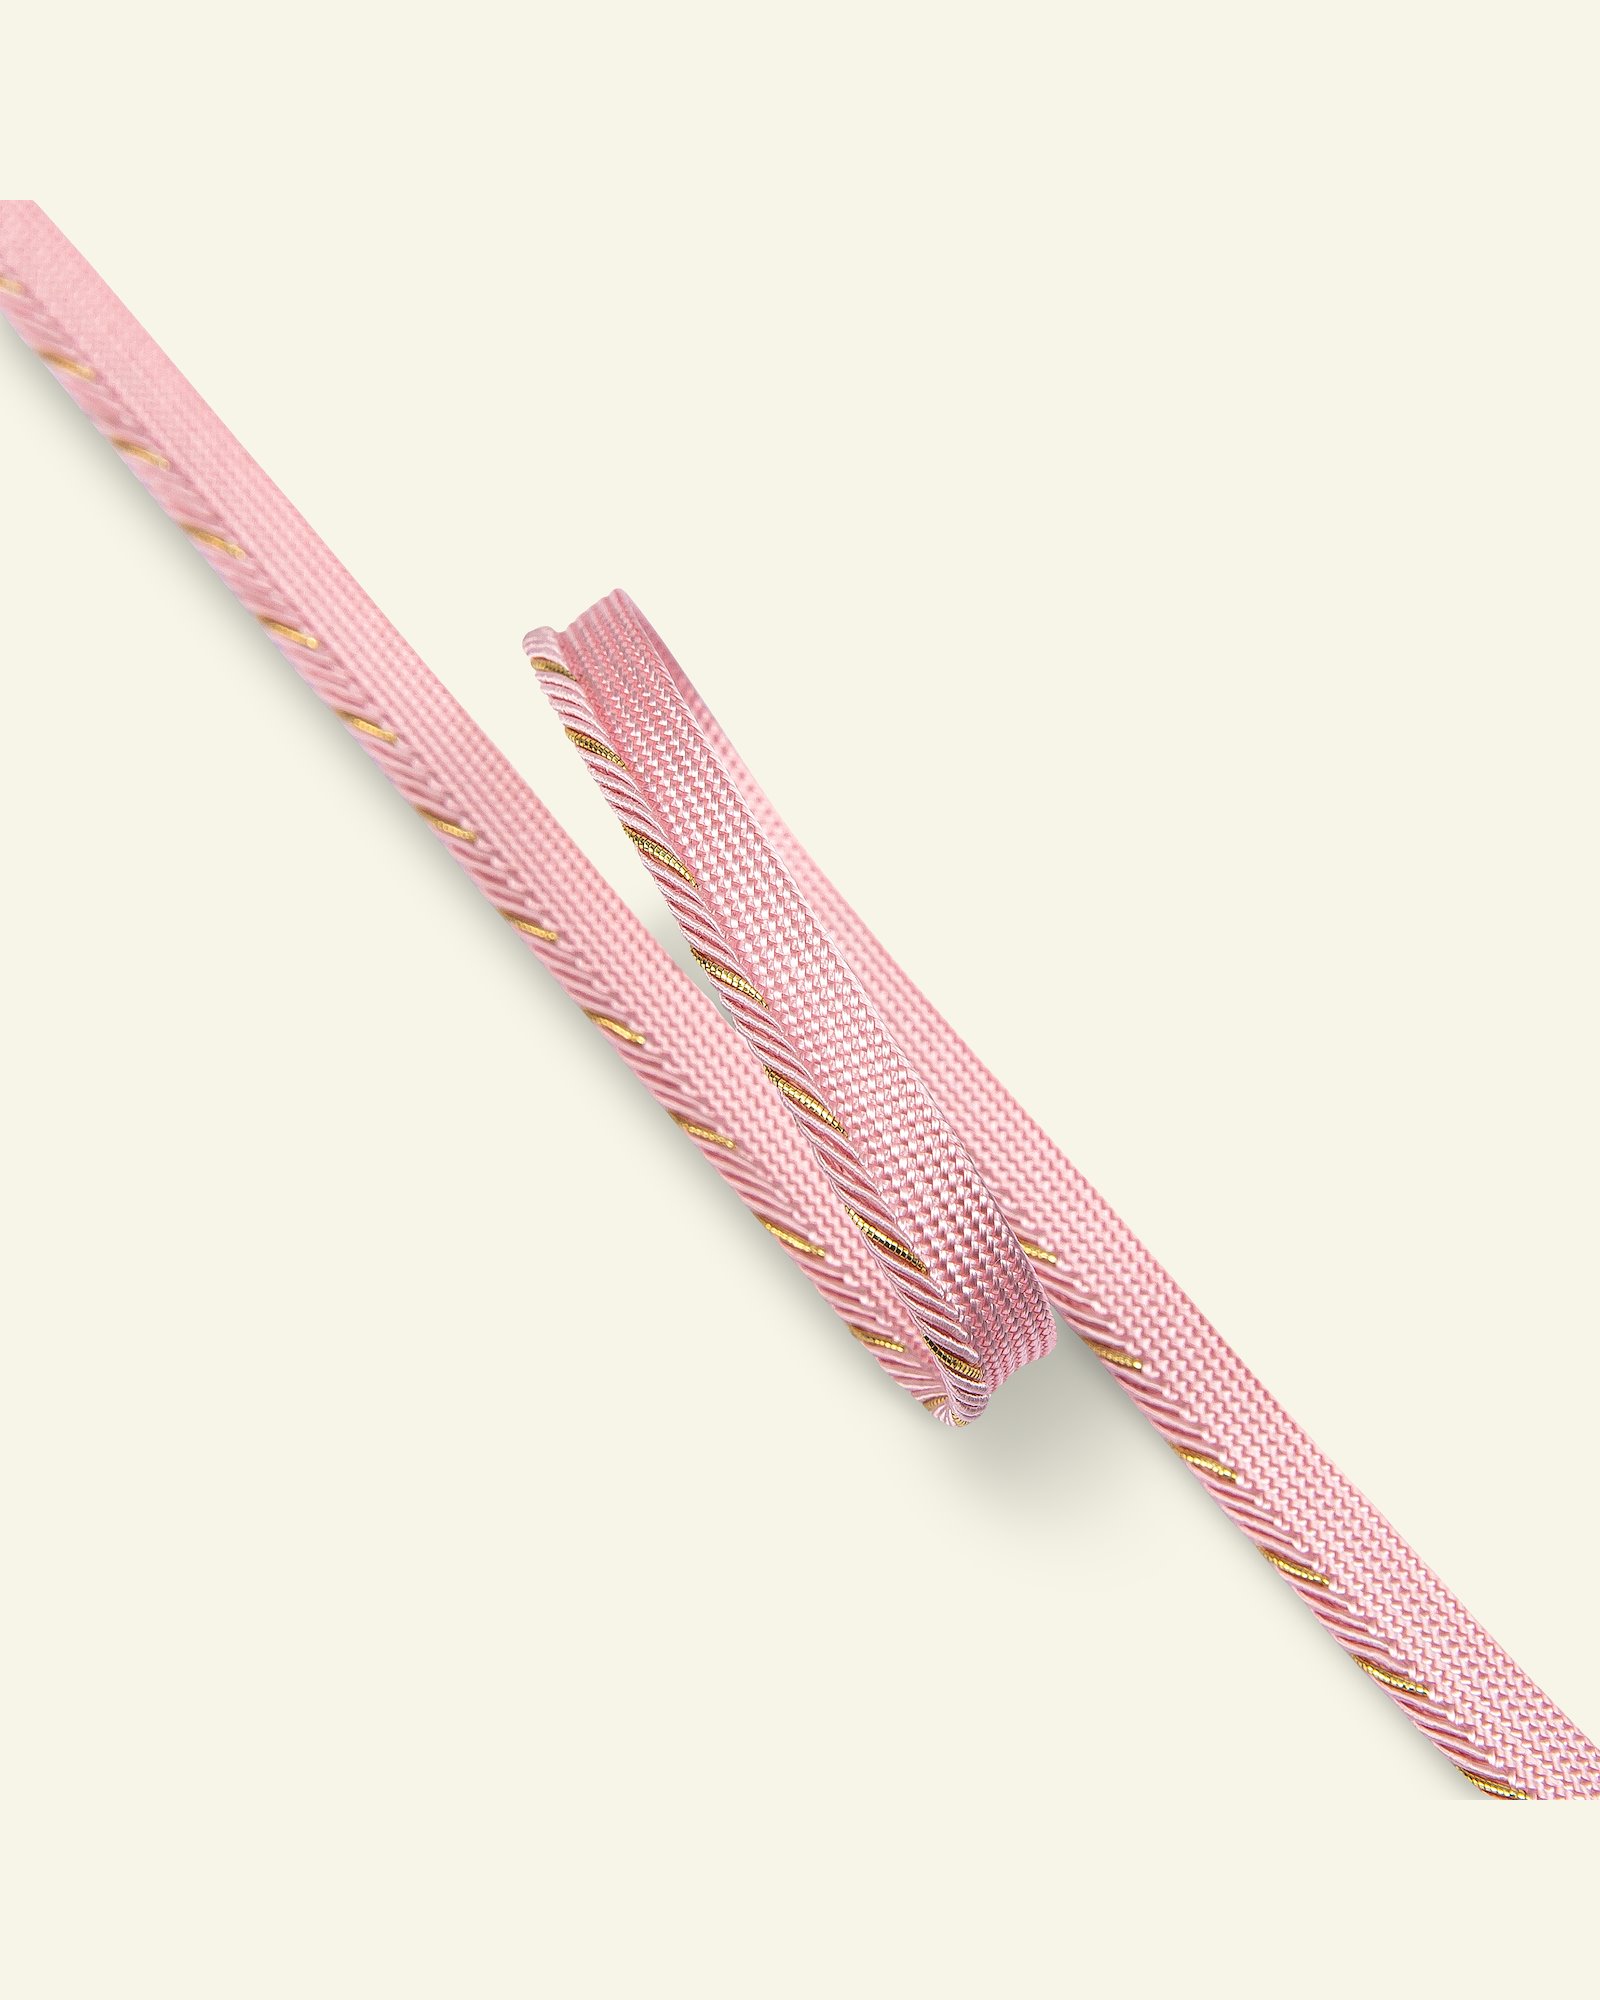 Pipingbånd 3mm rosa/guld lurex 3m 71152_pack